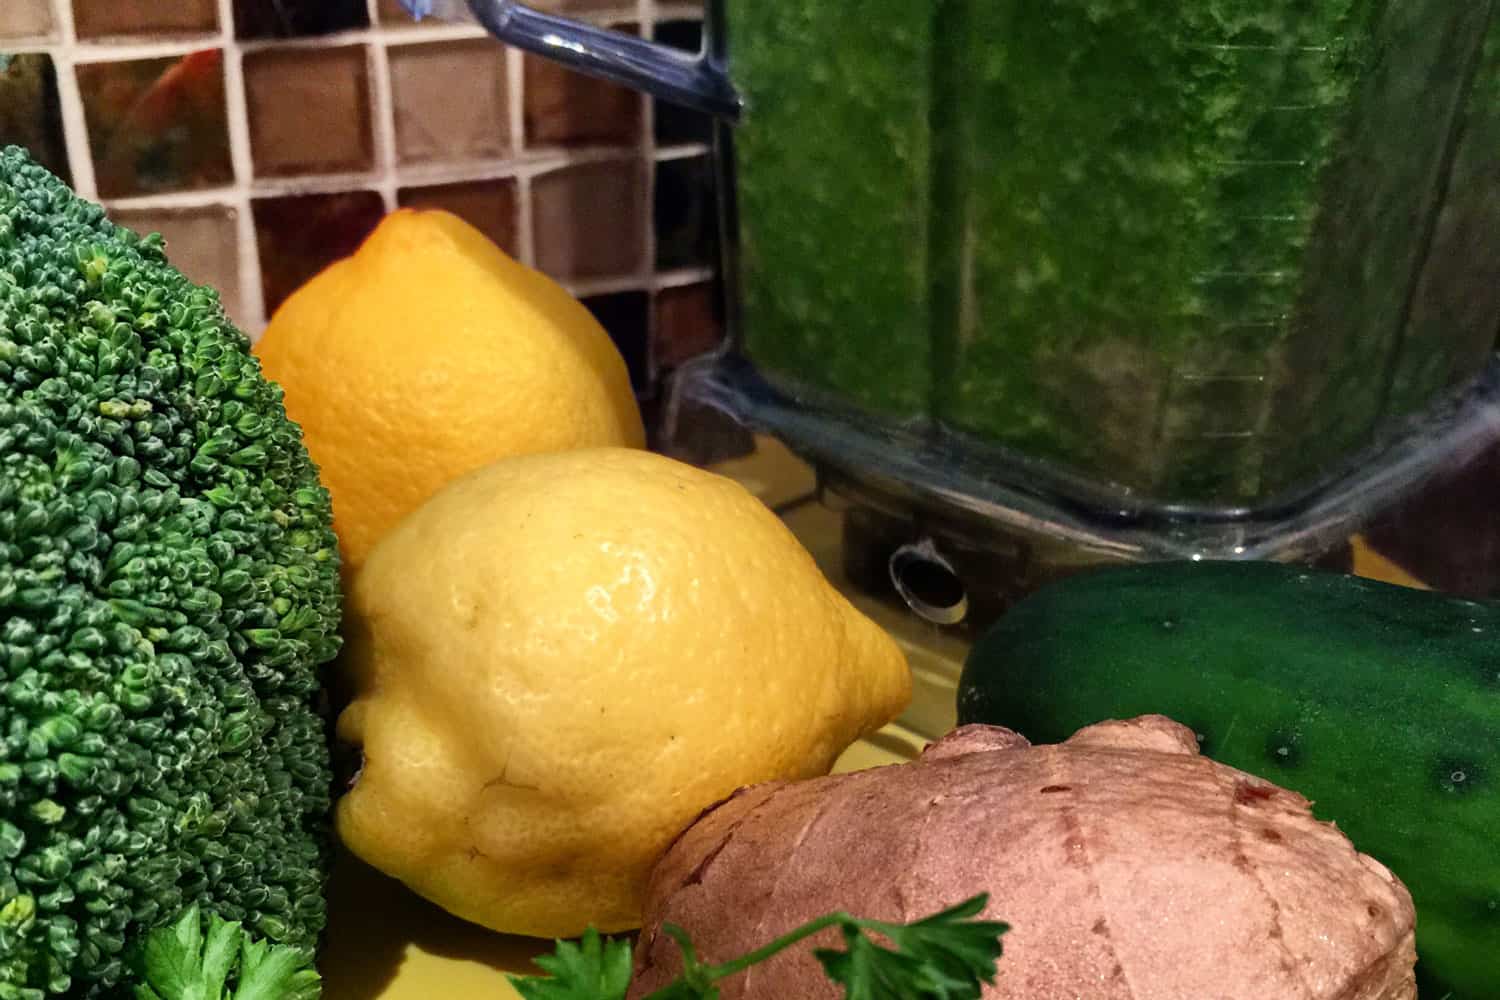 Green smoothie in blender with healthy ingredients